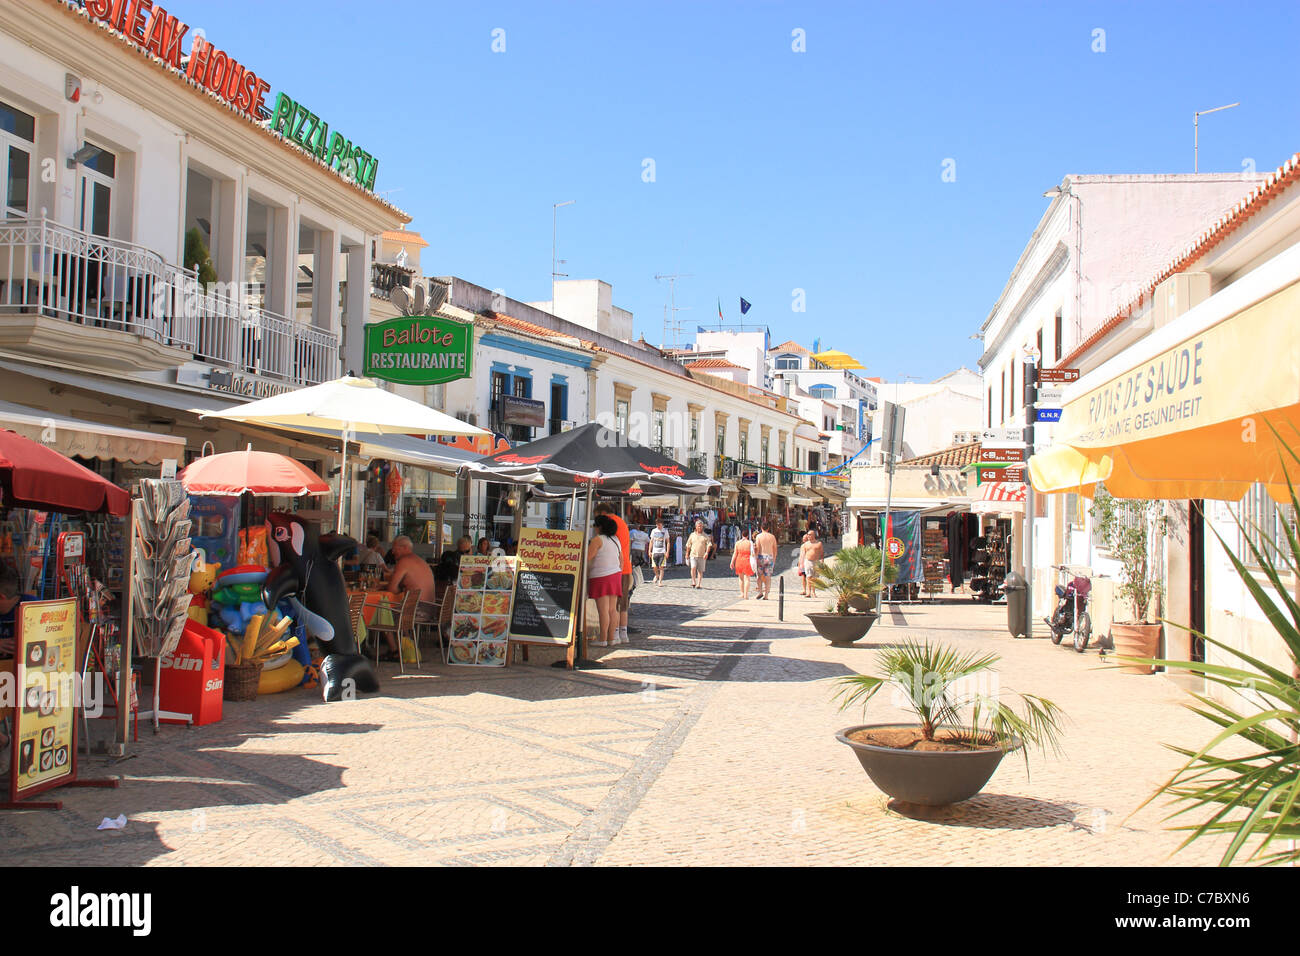 A Typical Street Scene Taken In Albufeira Algarve Portugal Stock Photo Alamy